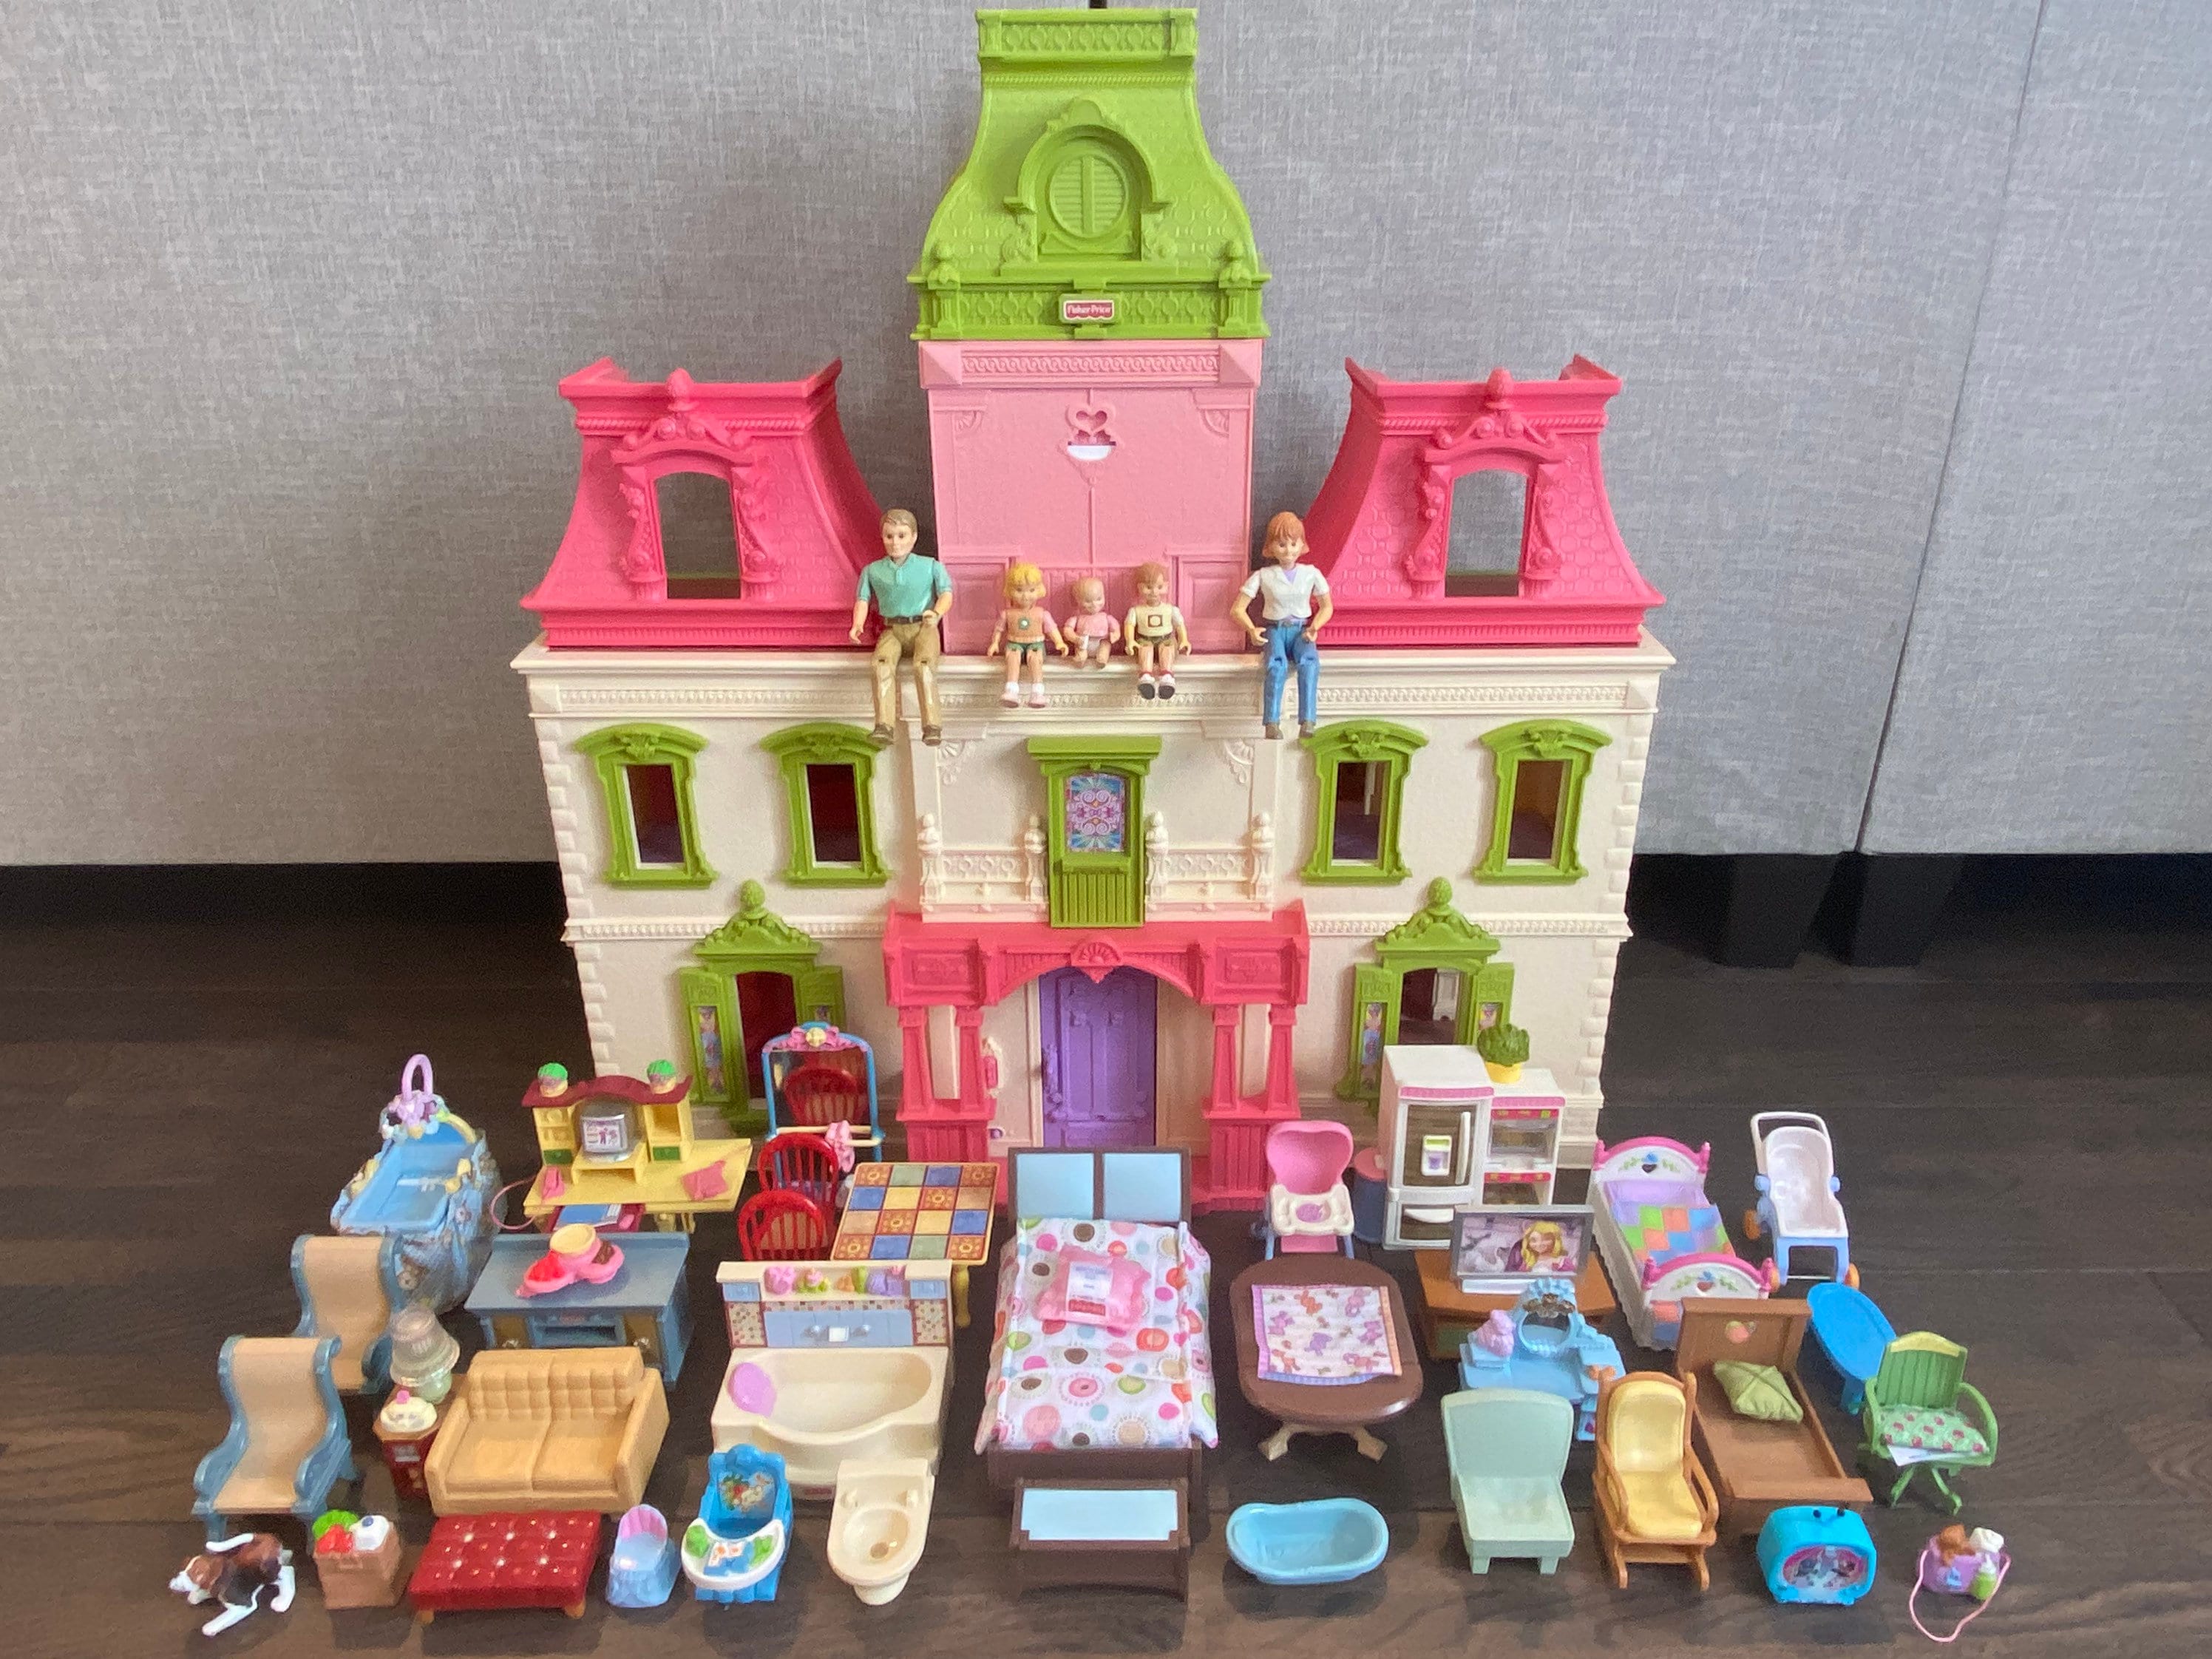 Littlest Pet Shop Dollhouses & Play Sets